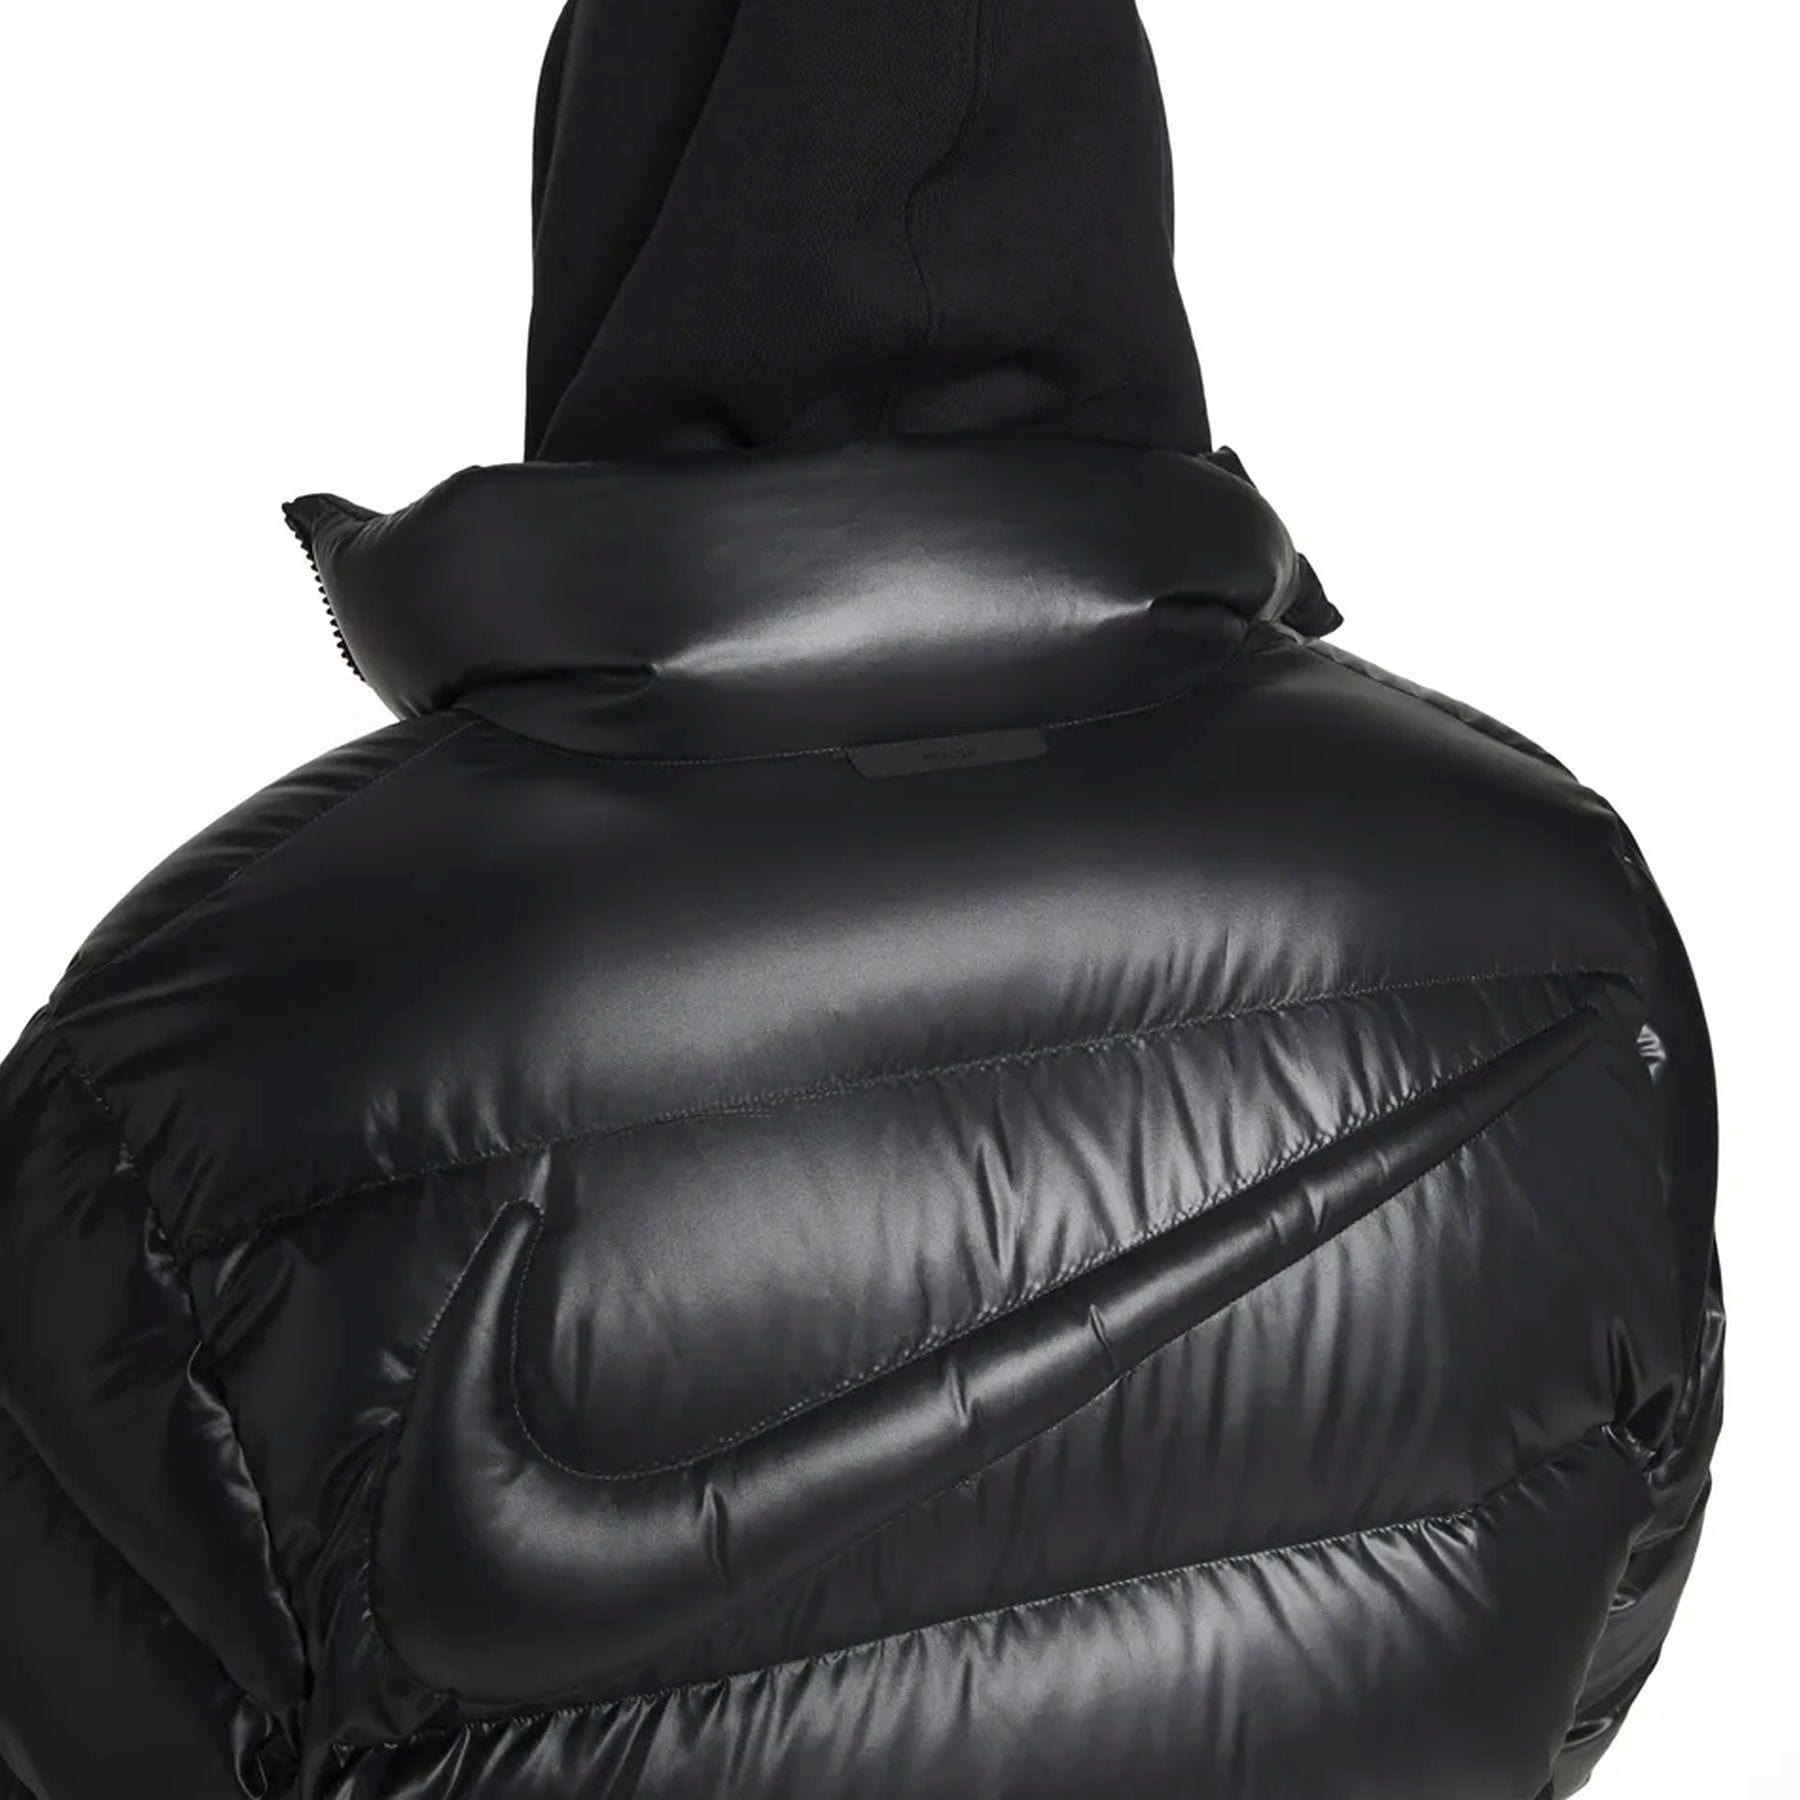 Nike x Drake NOCTA NRG Puffer Jacket 'Black'